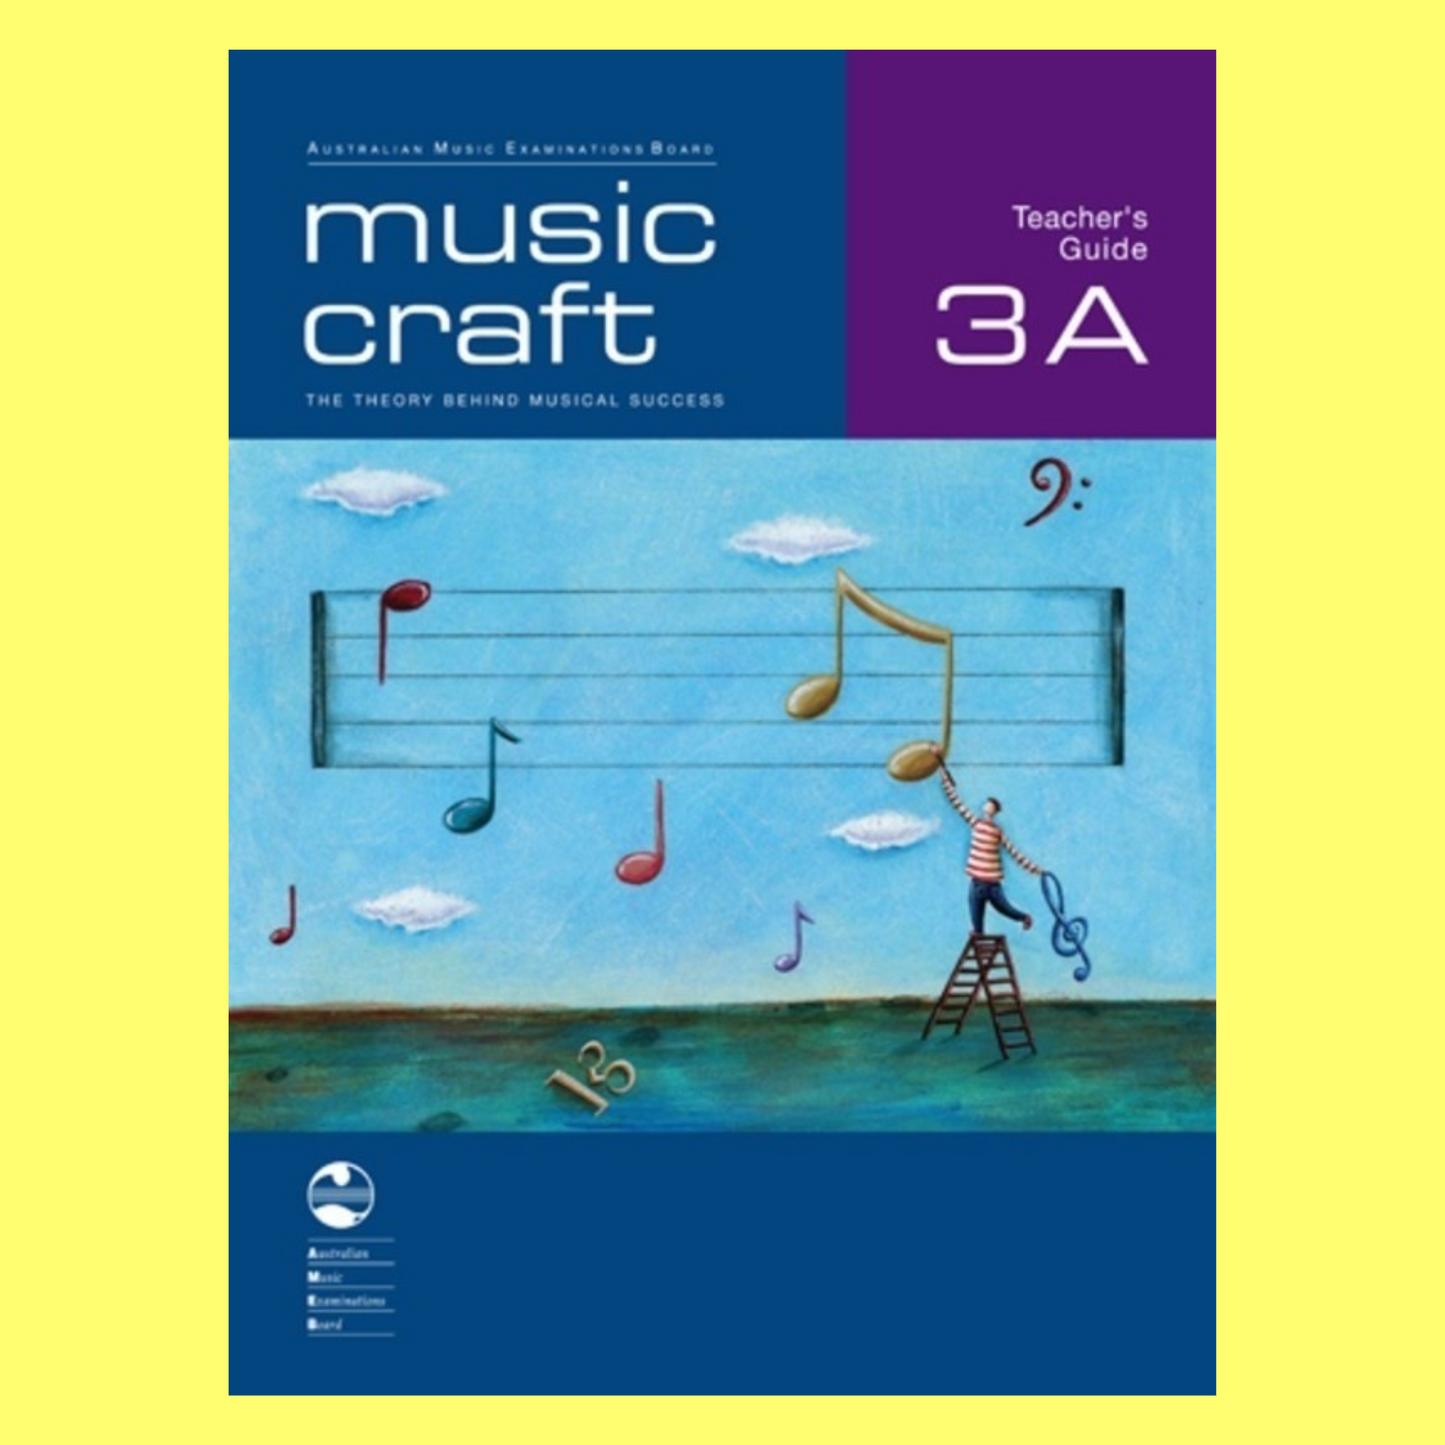 AMEB Music Craft - Teachers Guide Grade 3 Book A